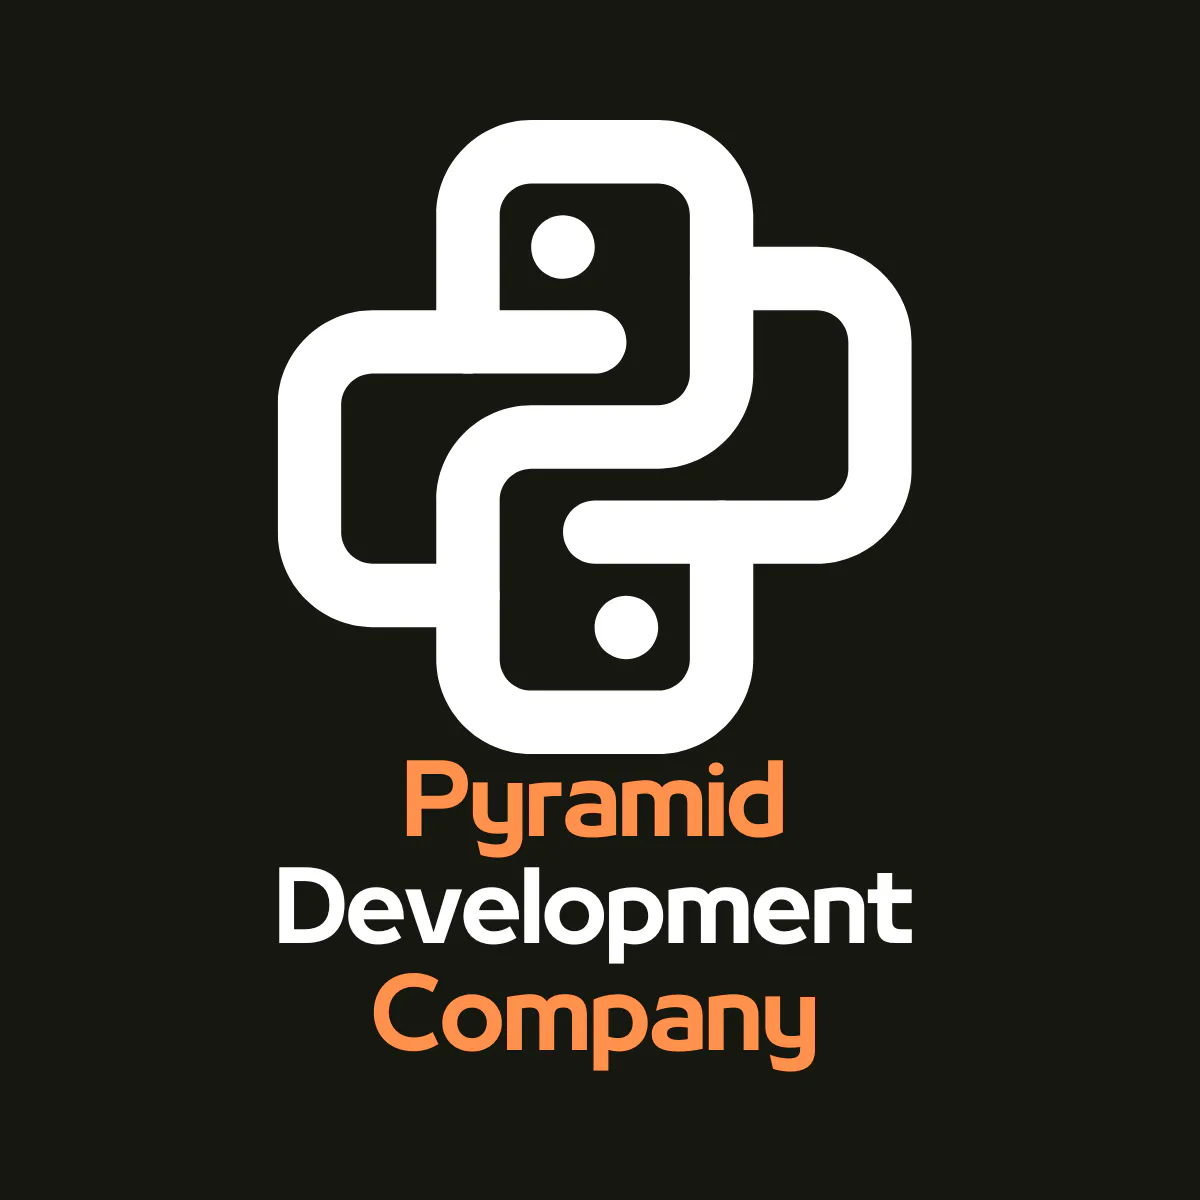 Pyramid Development